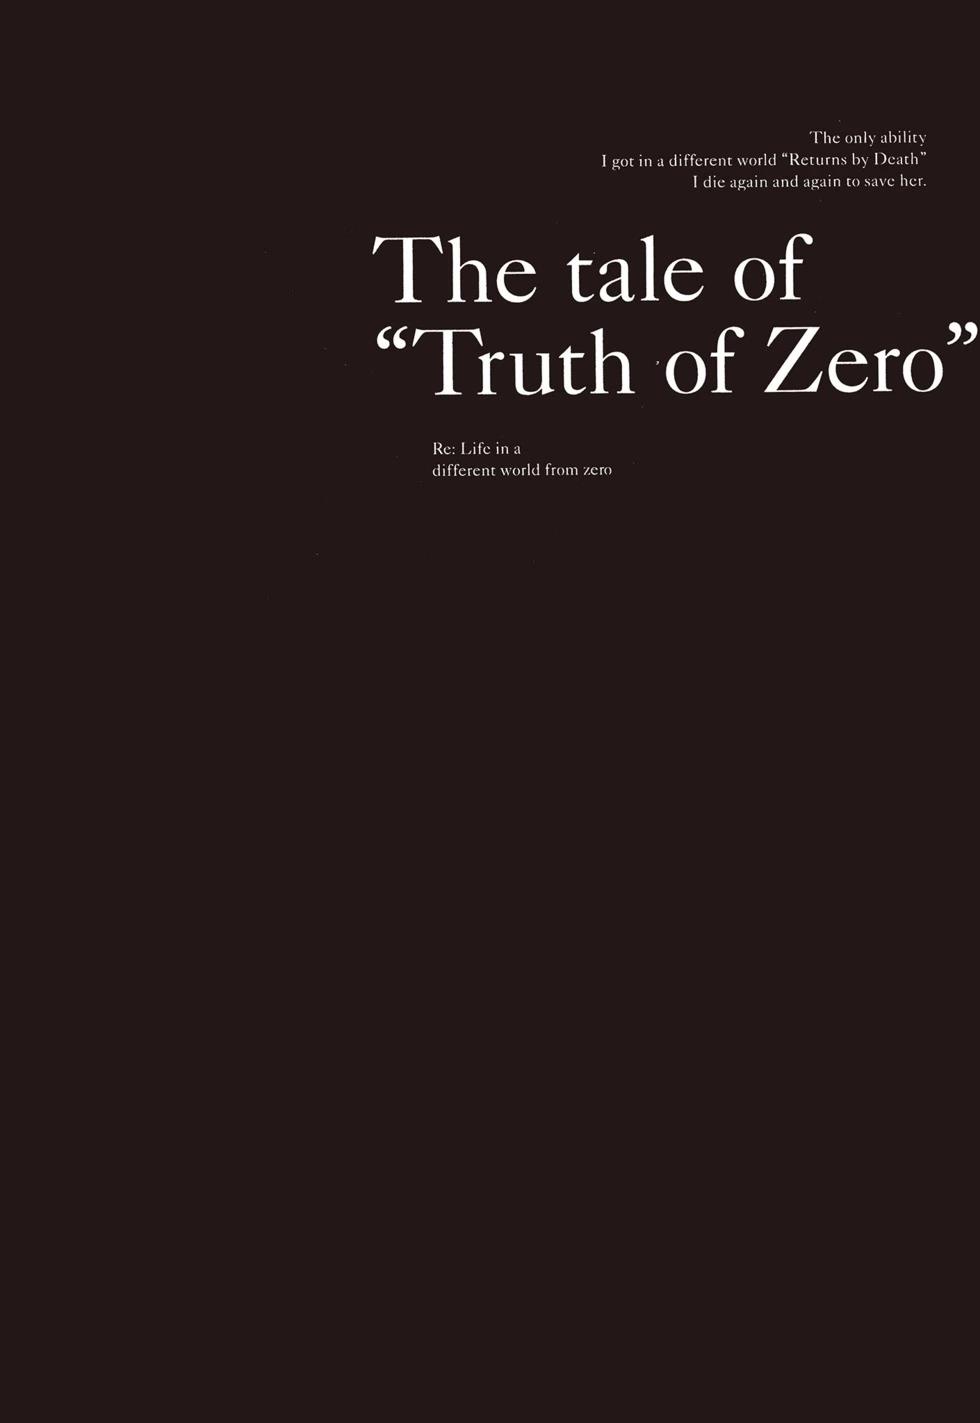 Re:從零開始的異世界生活 第三章 Truth of Zero - 第09卷(1/4) - 5